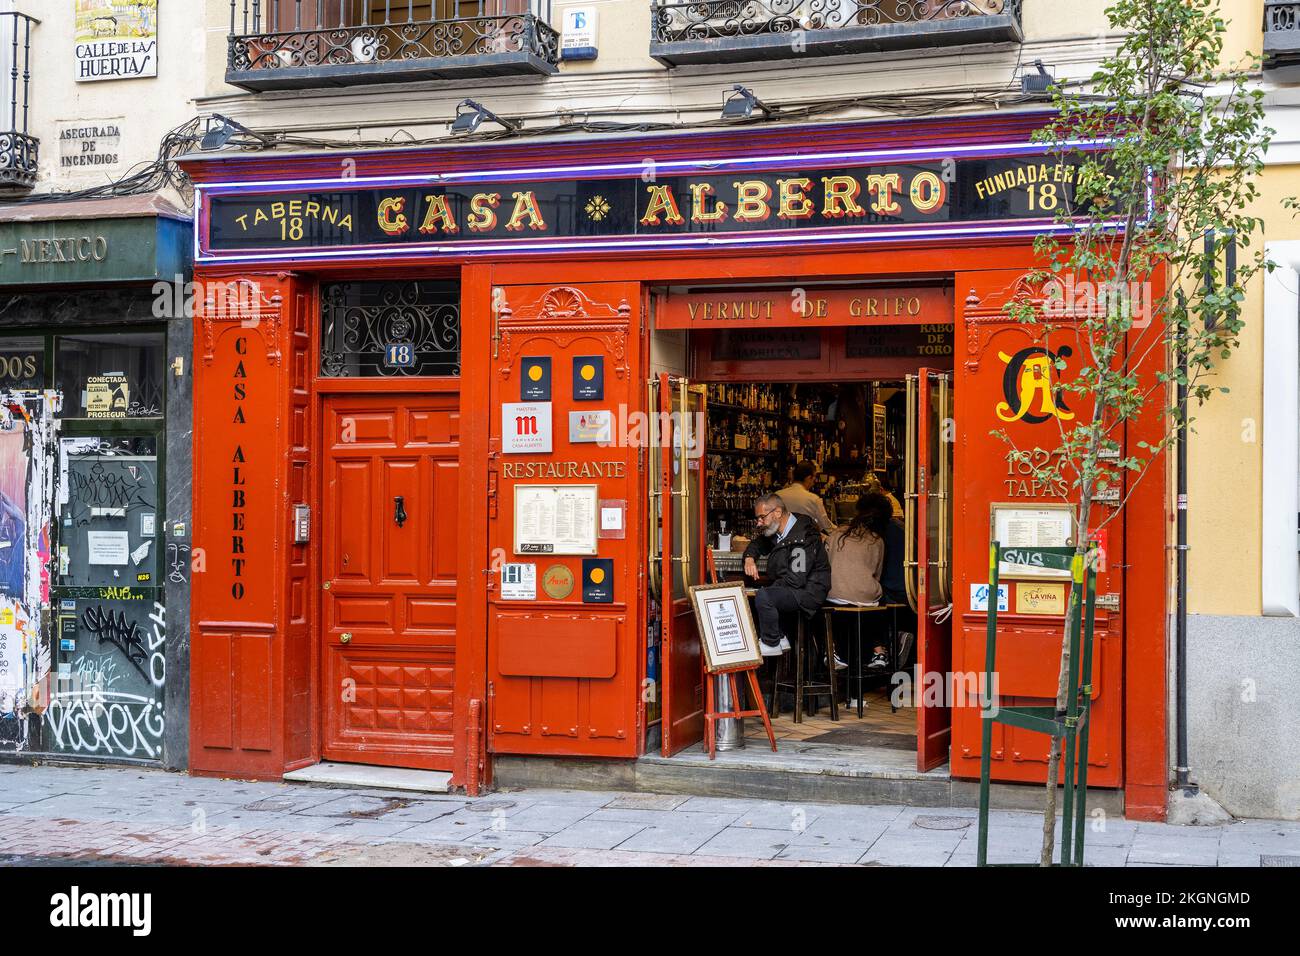 Le restaurant historique Taberna Casa Alberto, Madrid, Espagne Banque D'Images